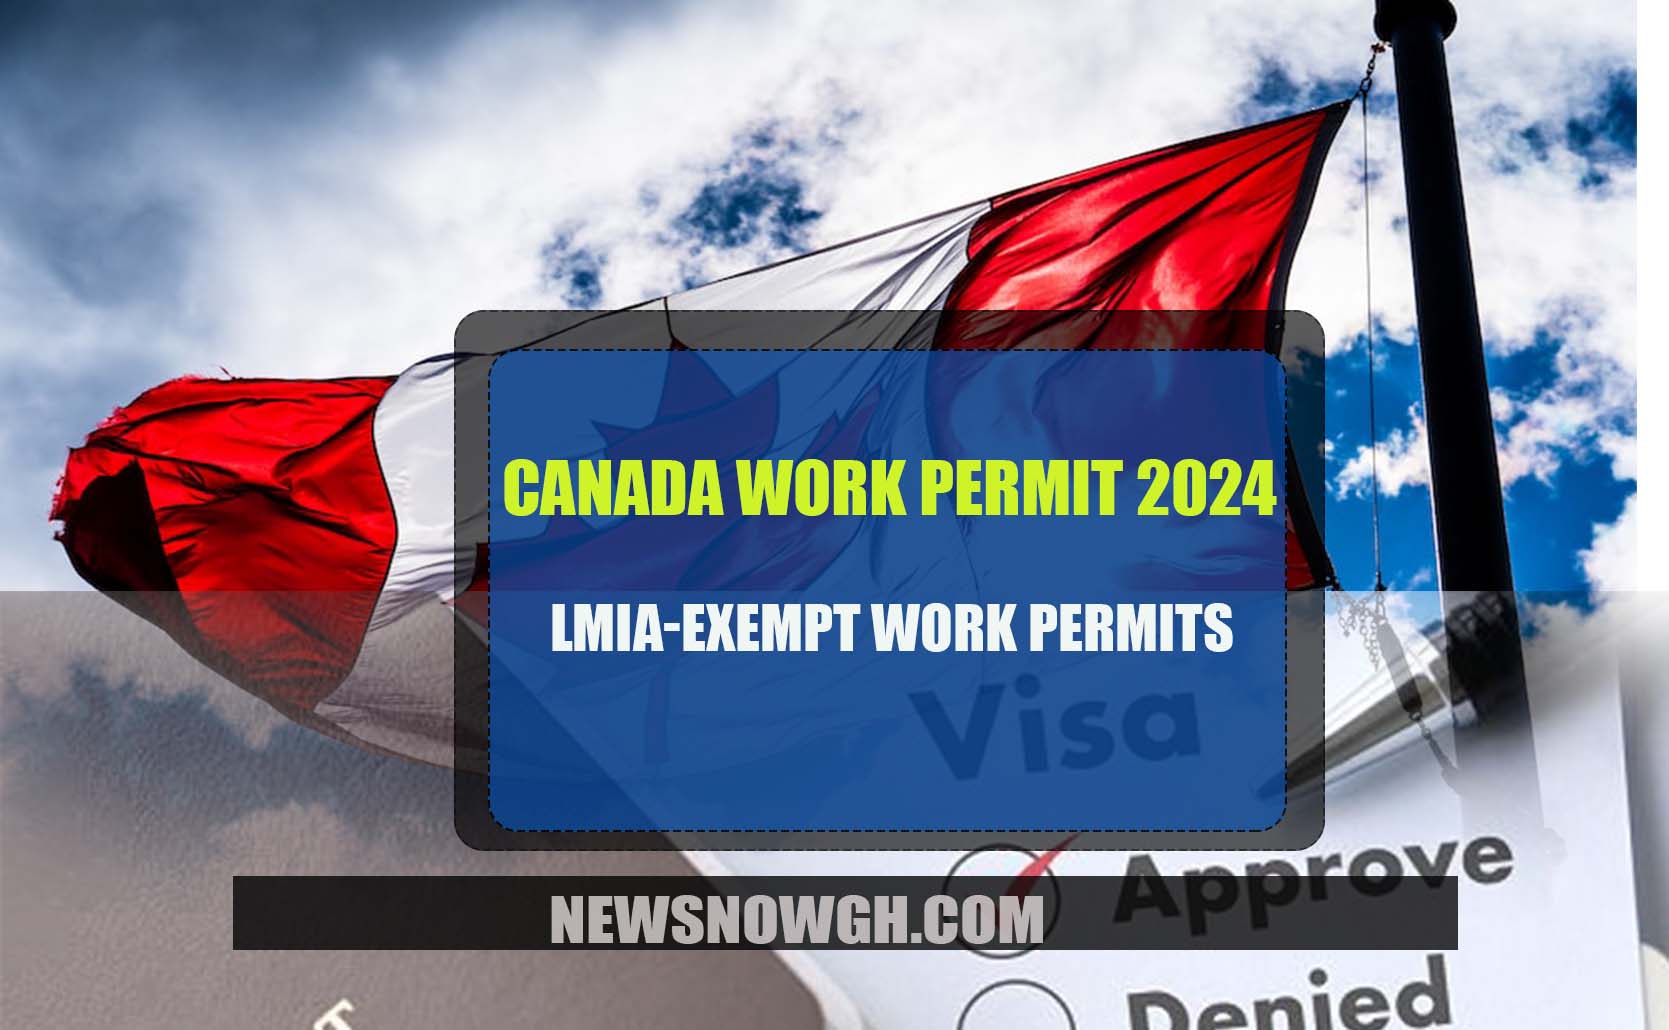 LMIAExempt Work Permits Canada Work Permit 2024